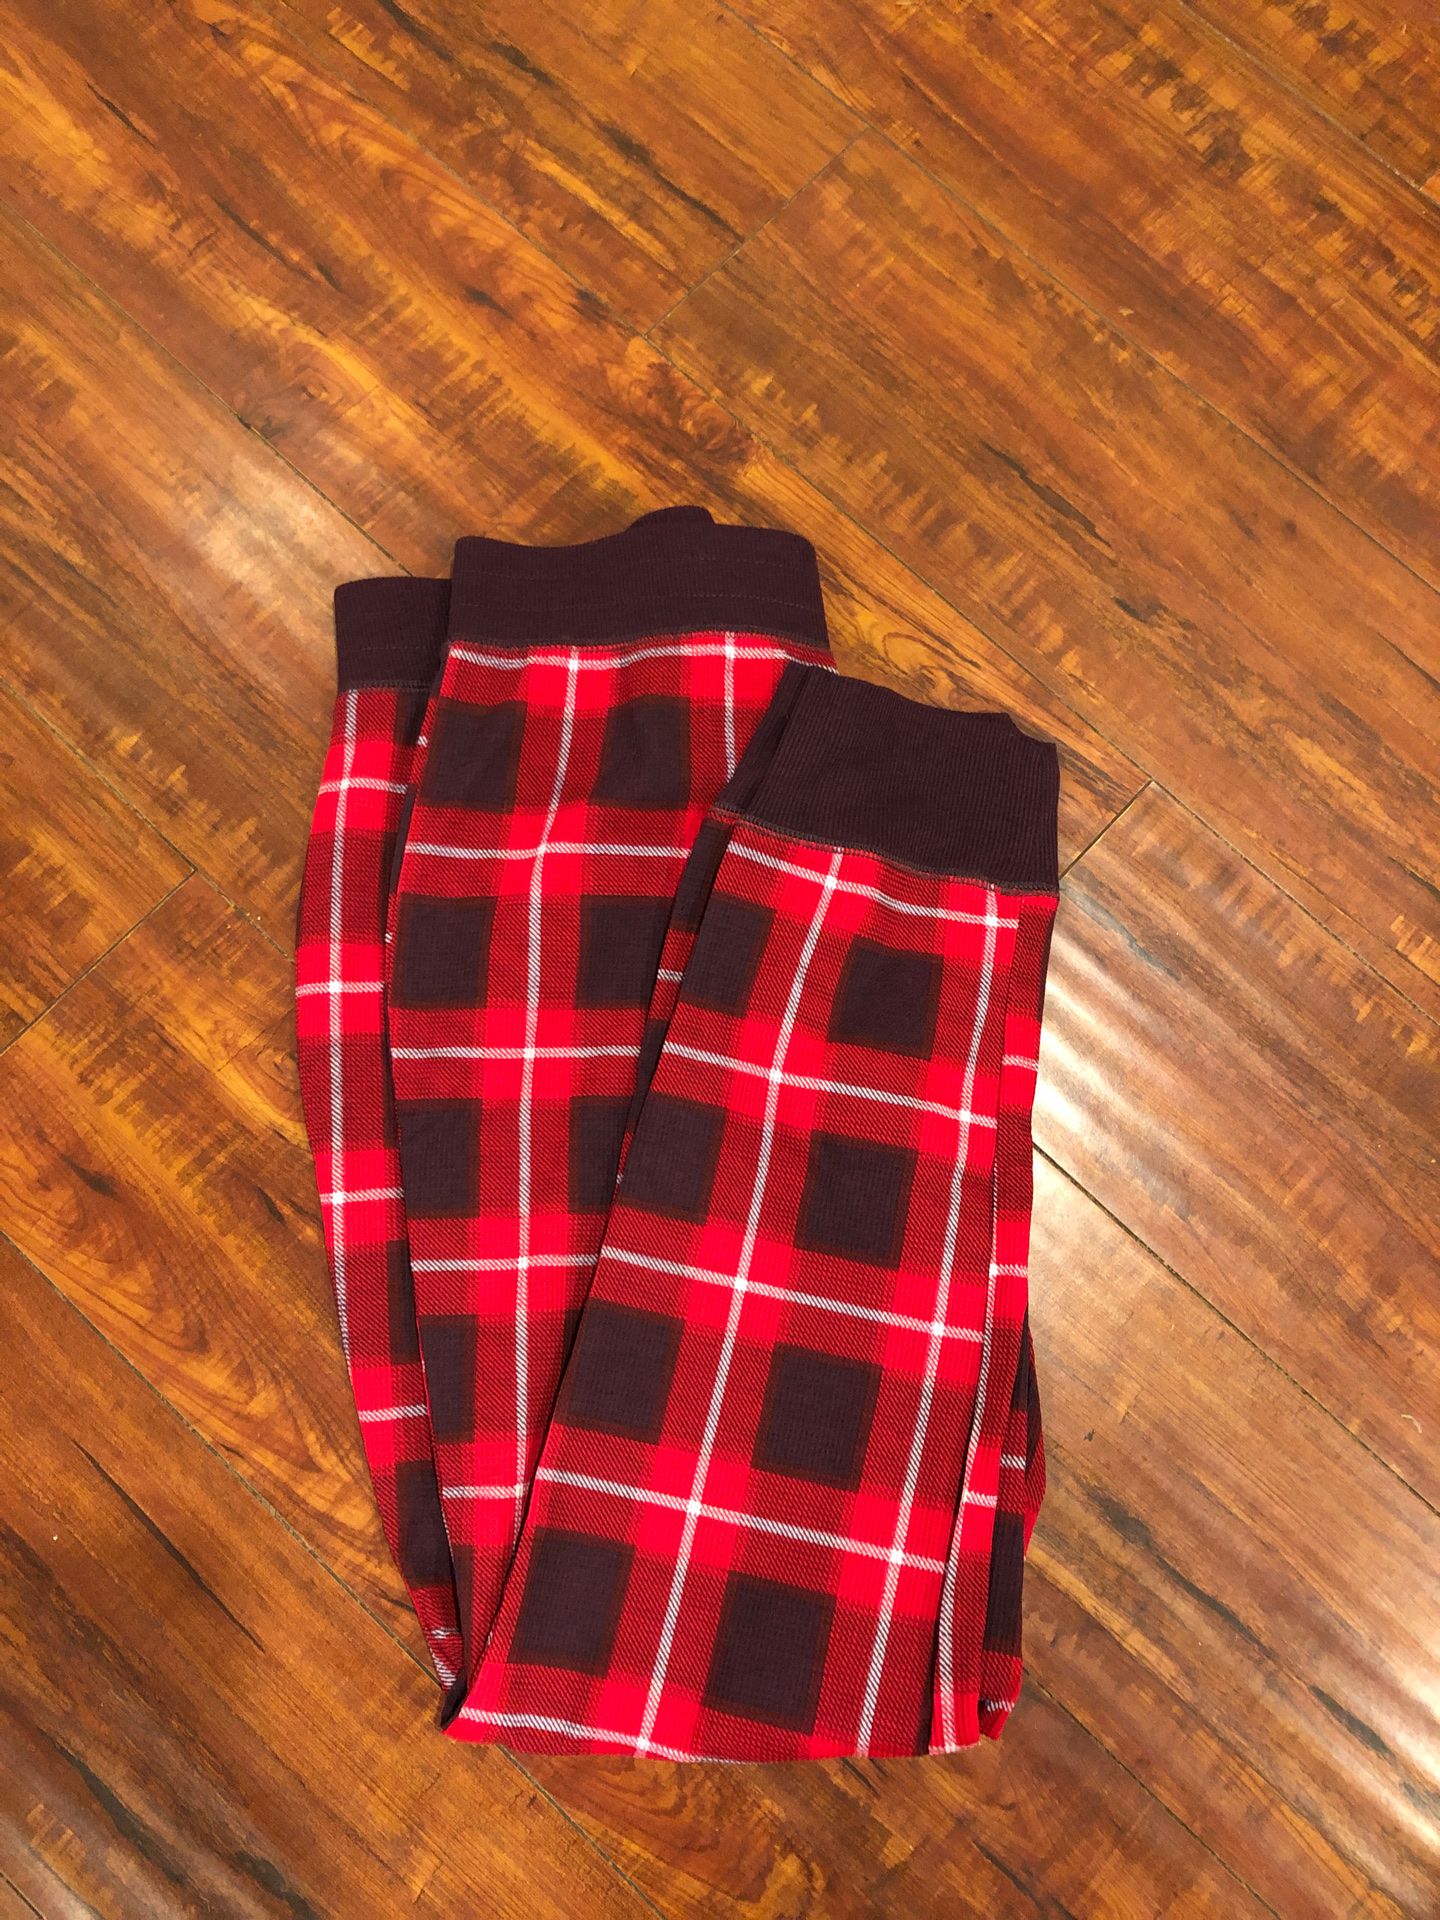 Plaid red Christmas women pajama bottoms $7 NEW